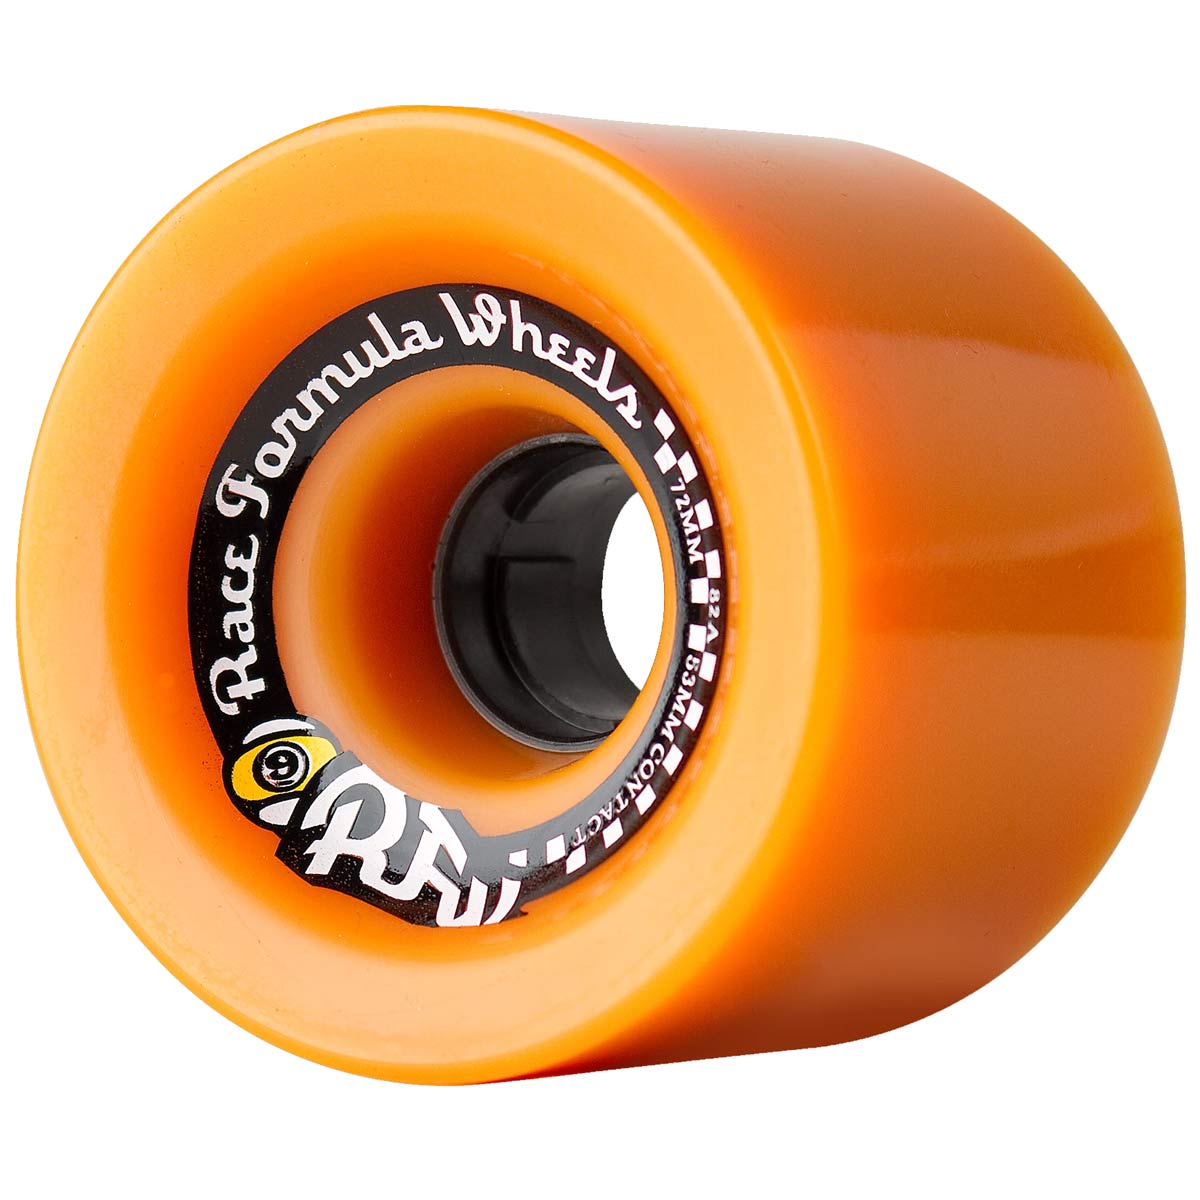 Sector 9 70mm 82a Contact Orange Race Formula Skateboard Wheels 